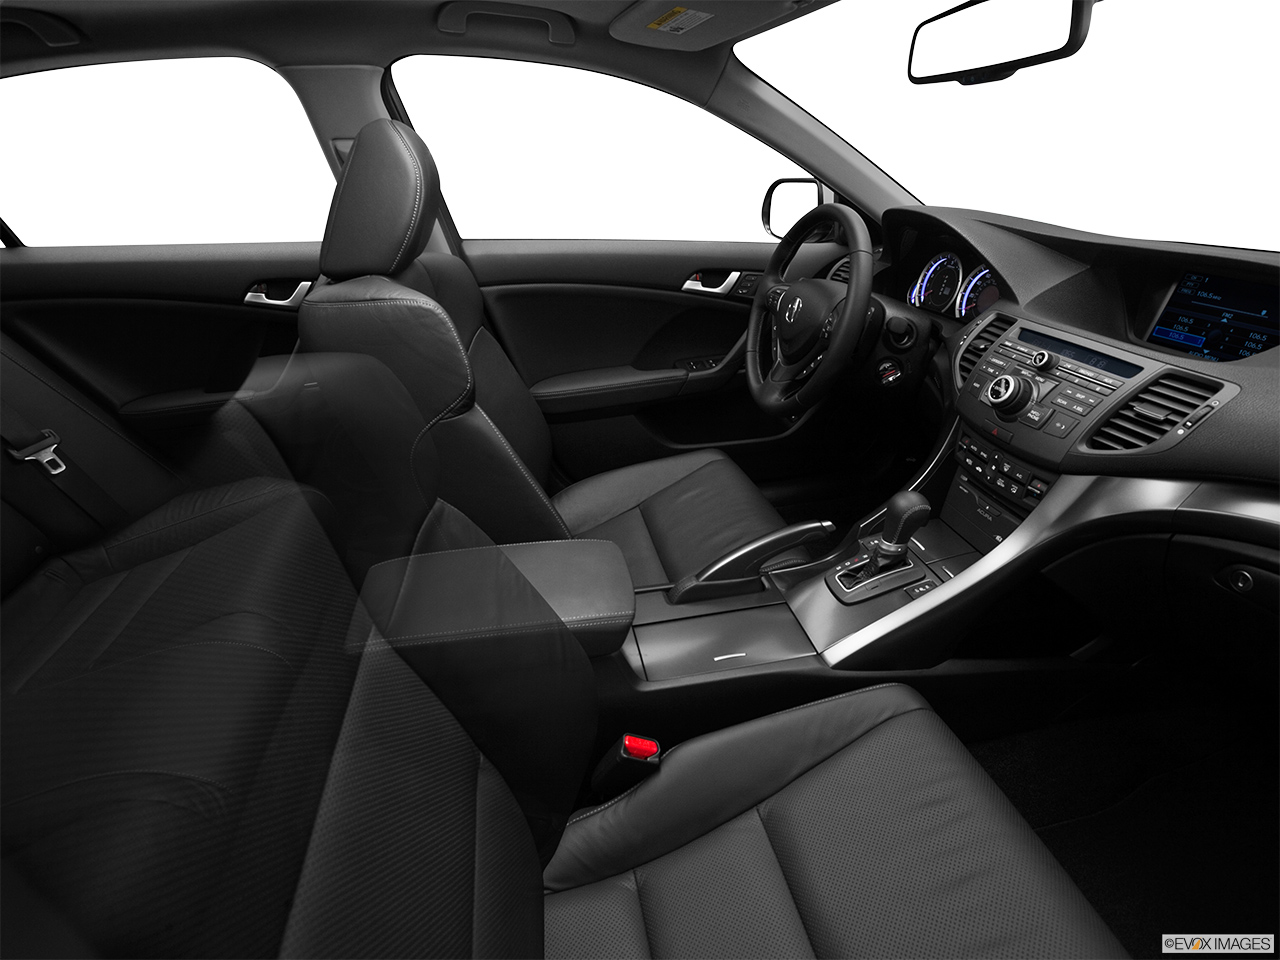 2012 Acura TSX 5-Speed Automatic Fake Buck Shot - Interior from Passenger B pillar. 